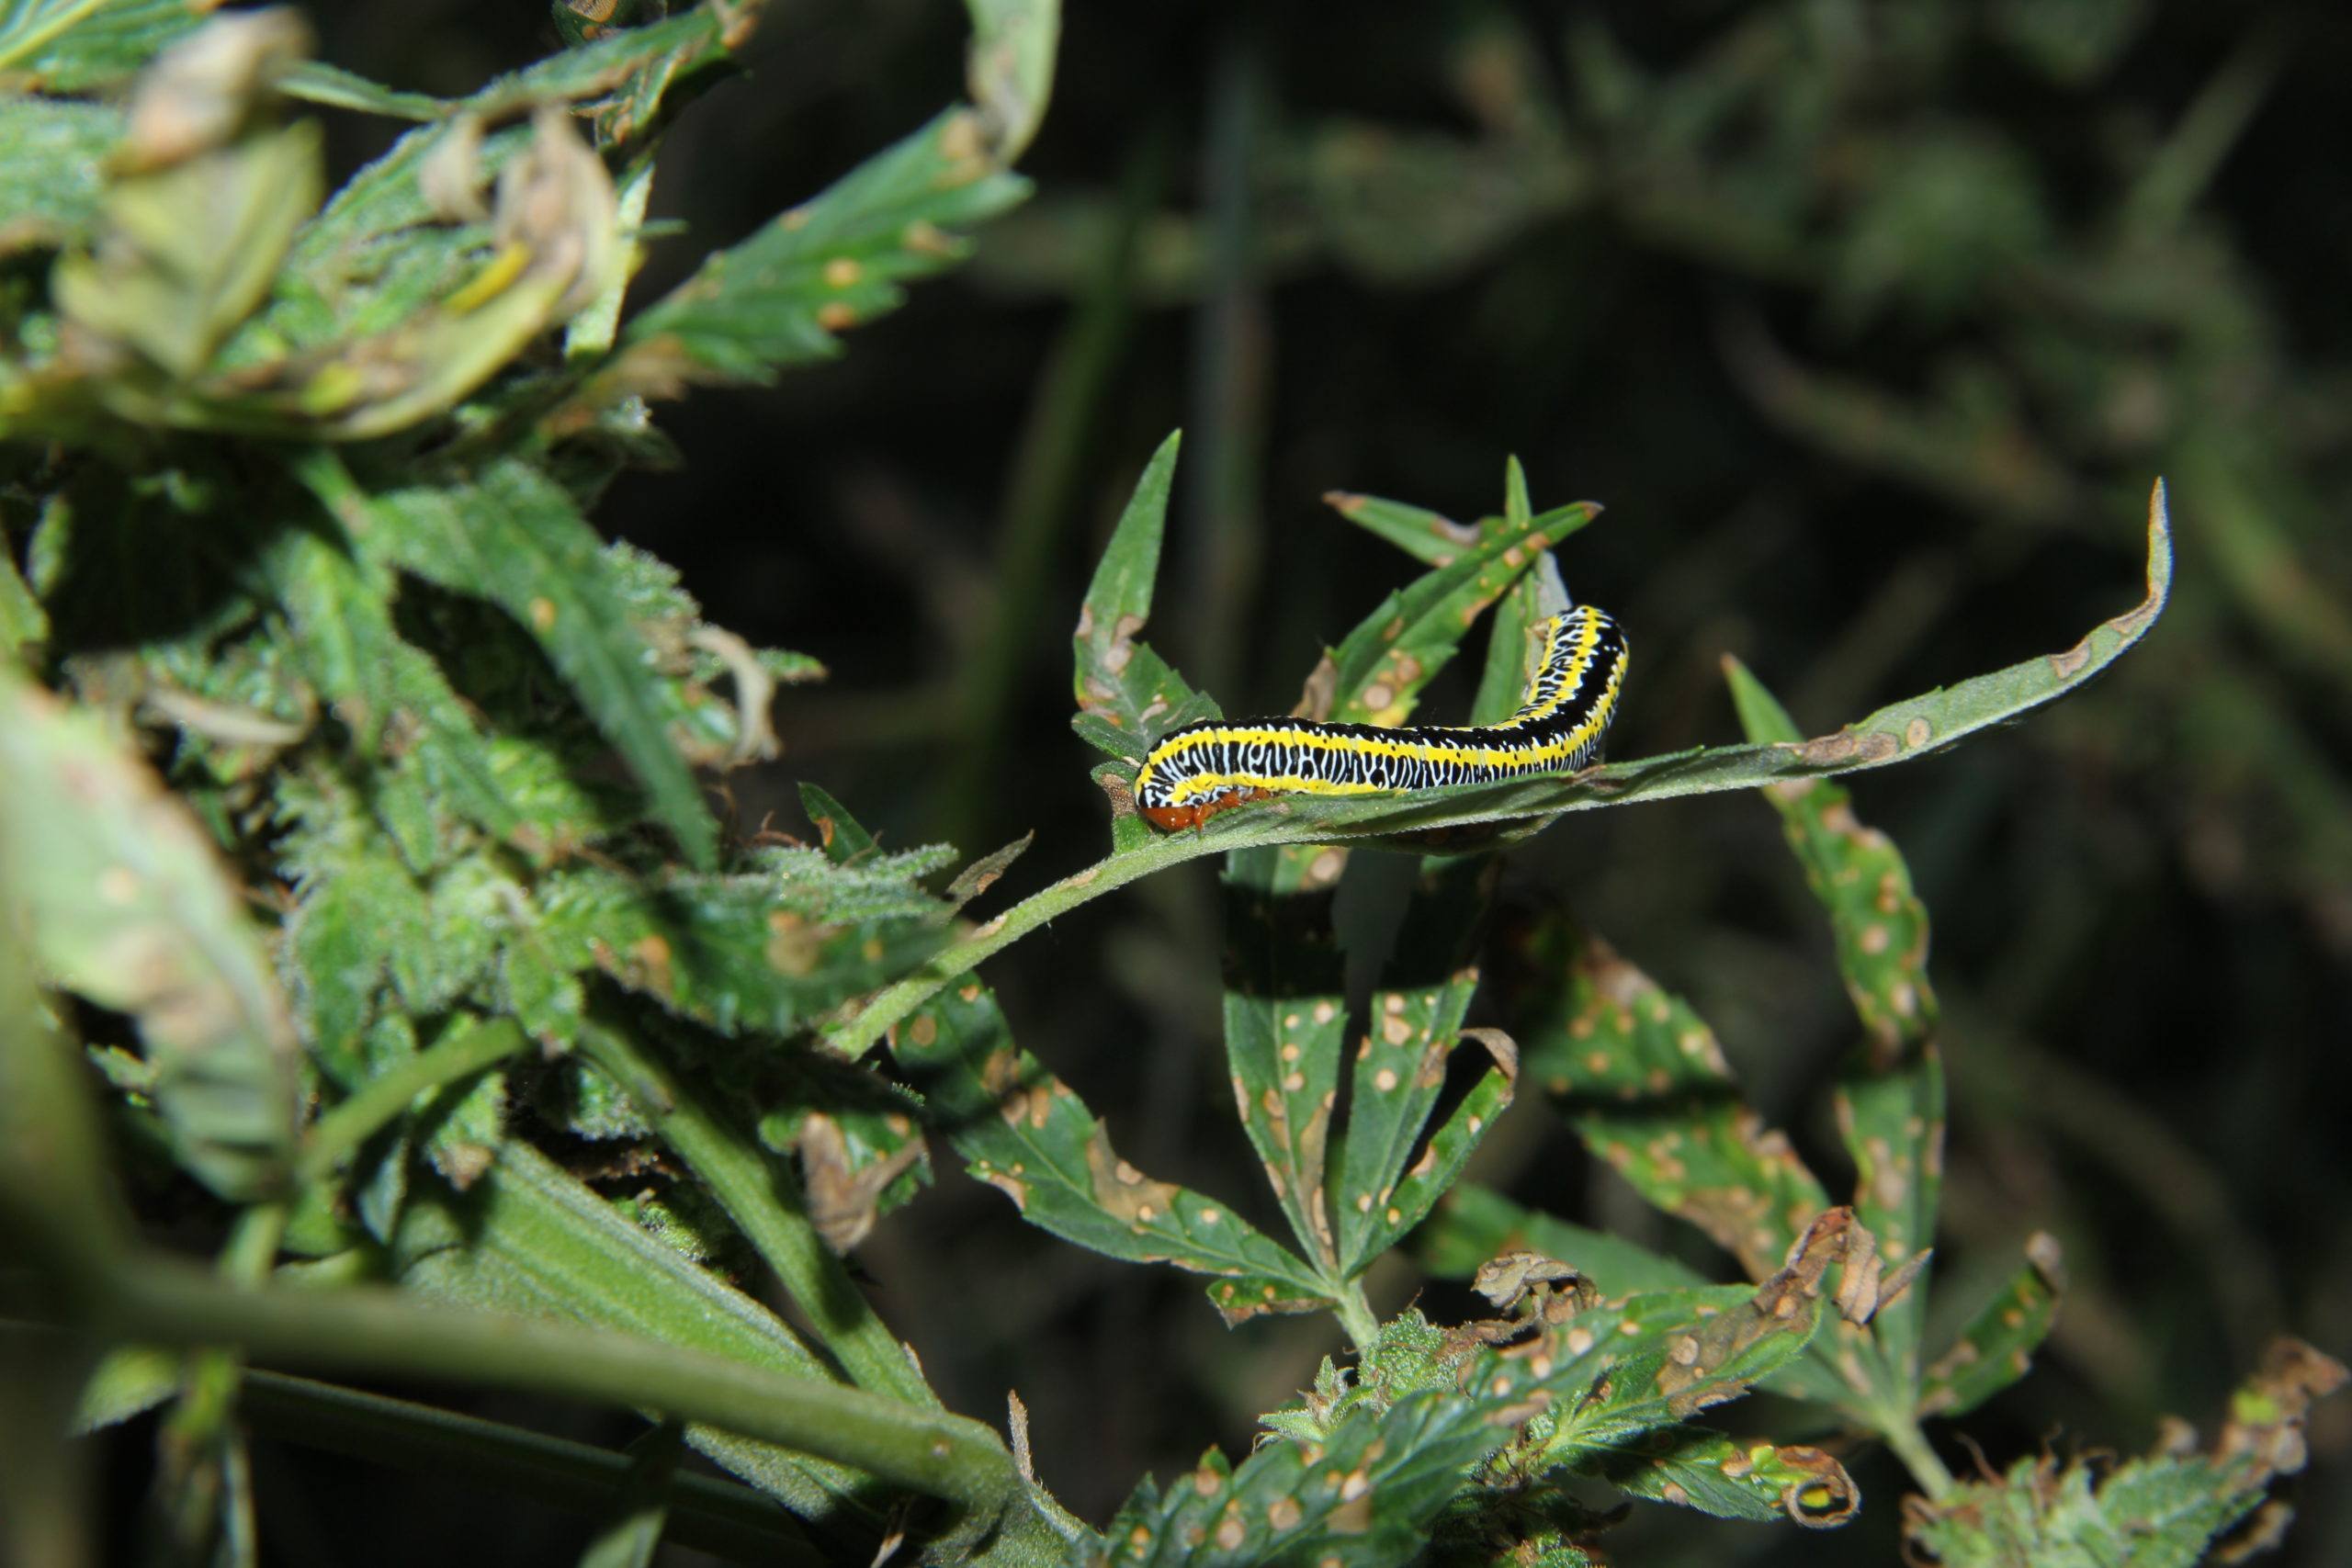 Image of a worm on a hemp plant